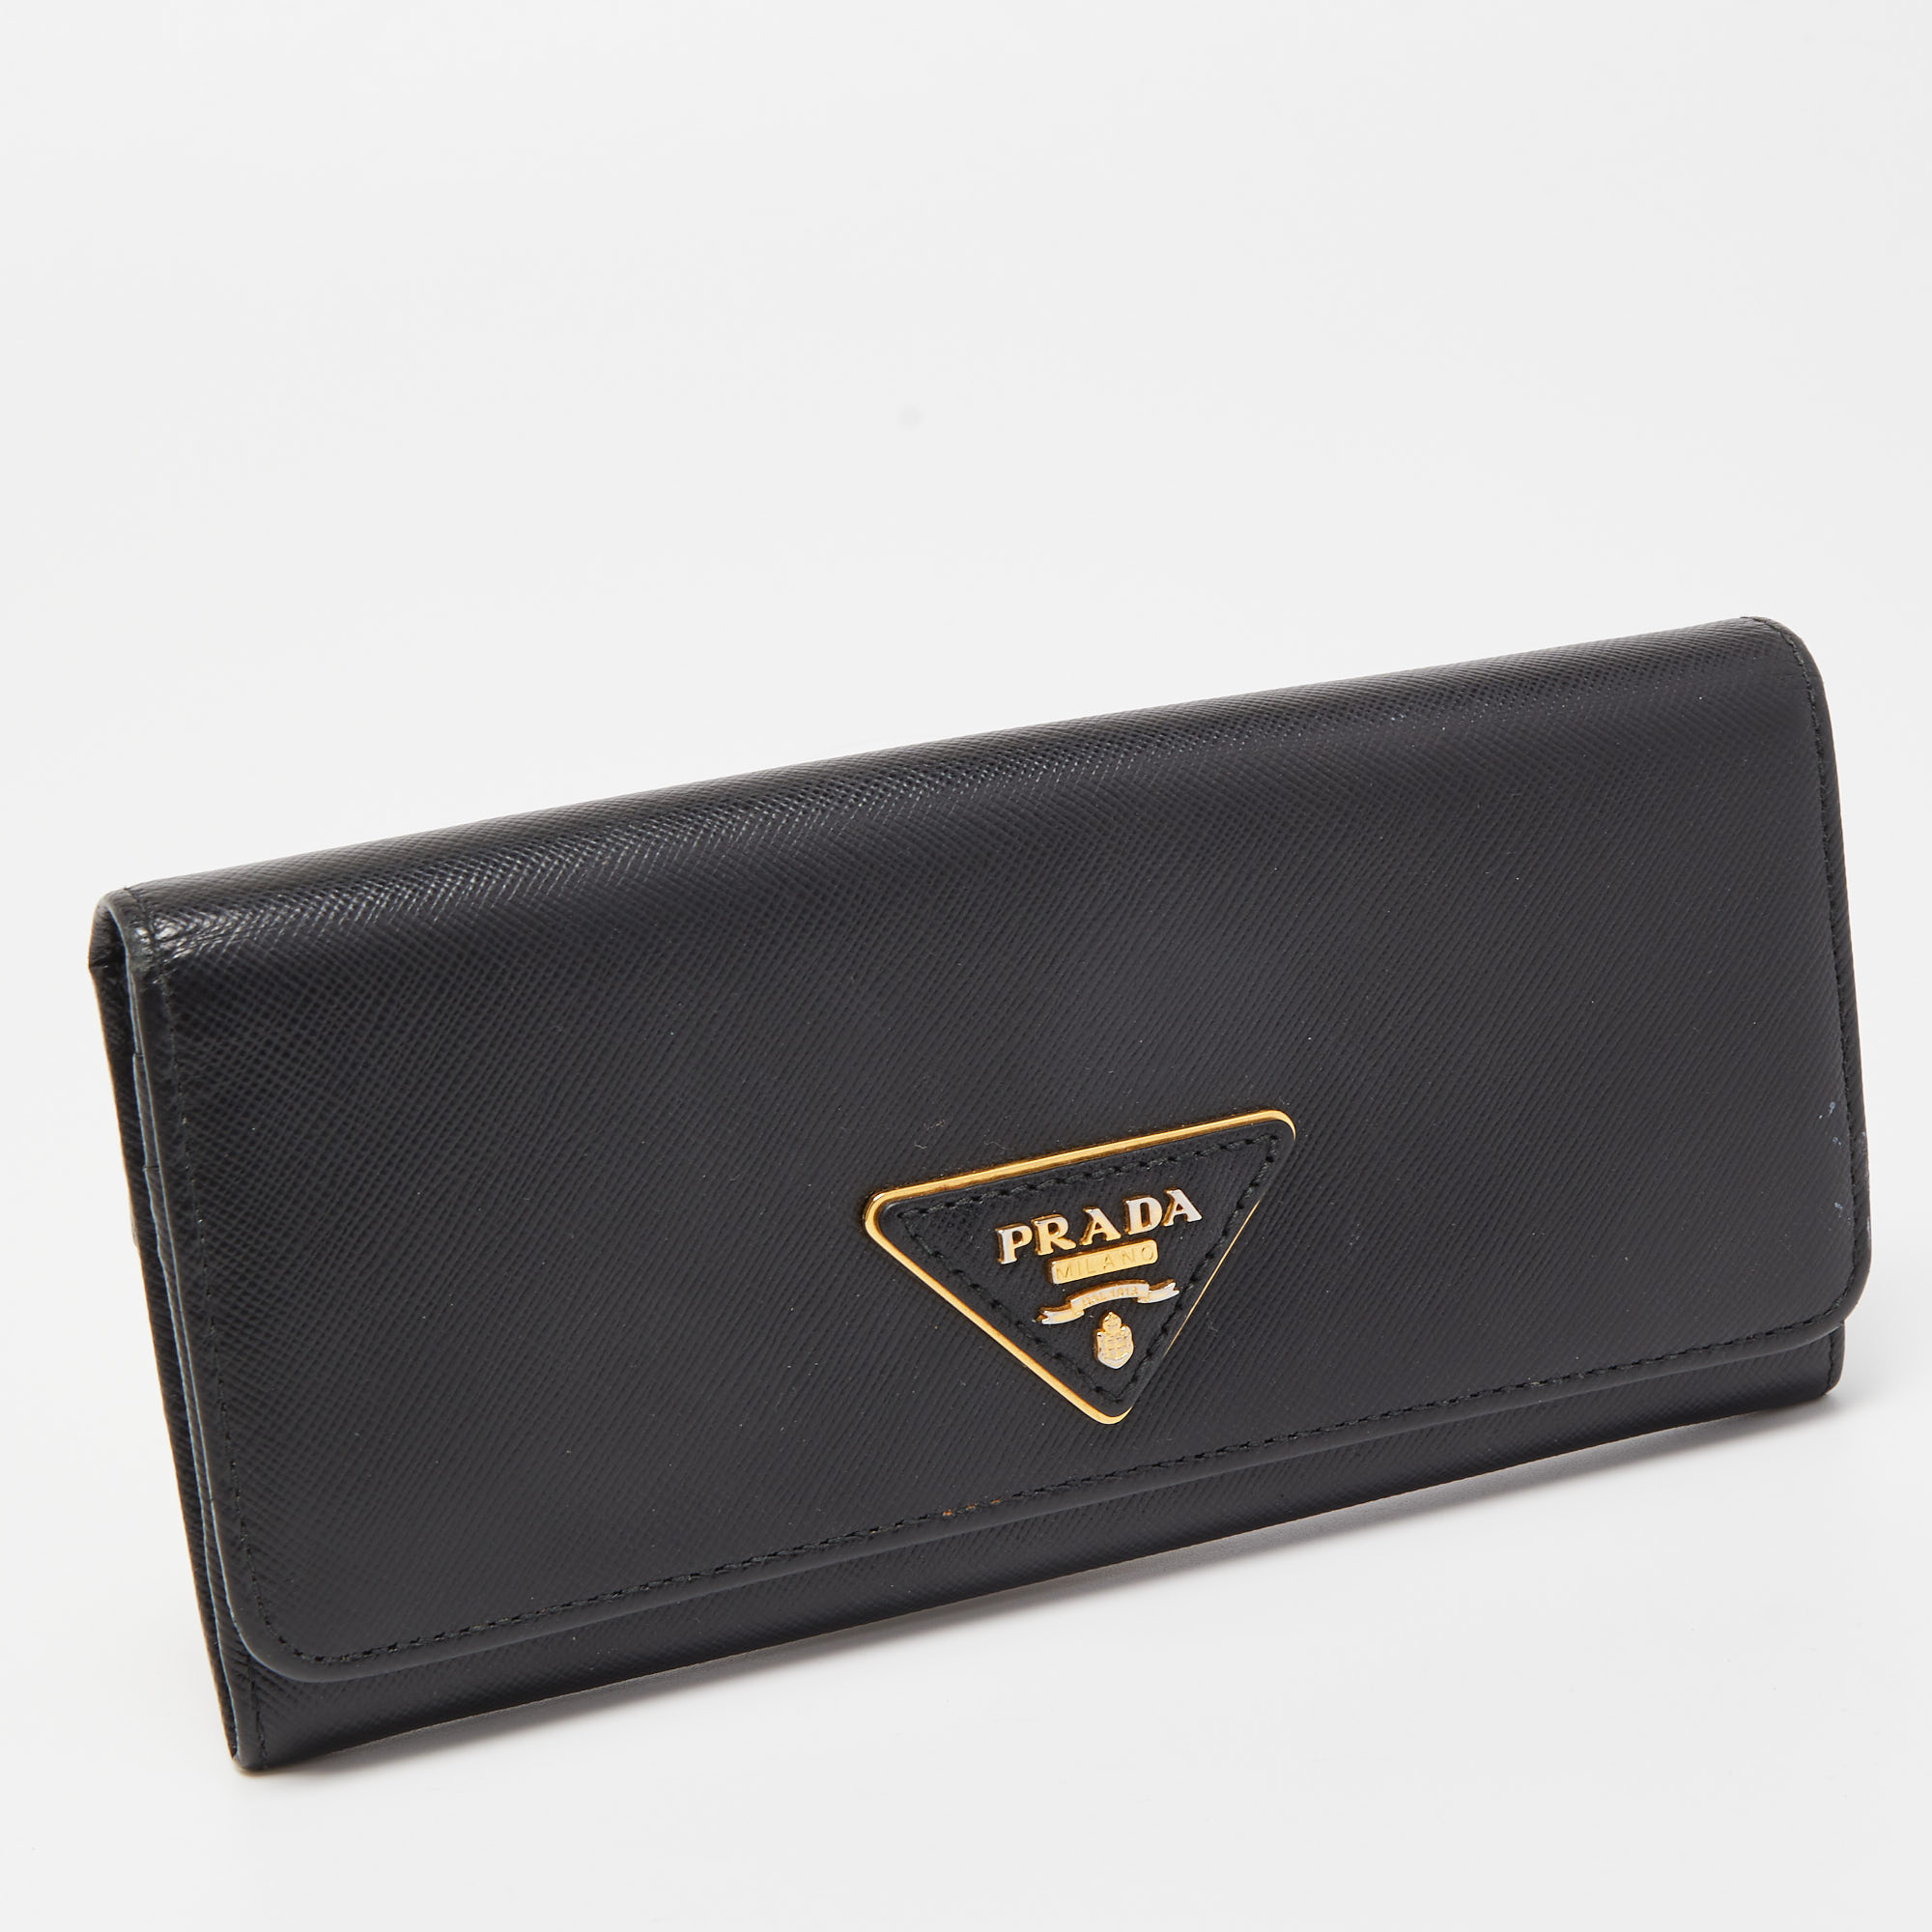 Prada Black Saffiano Lux Leather Flap Continental Wallet